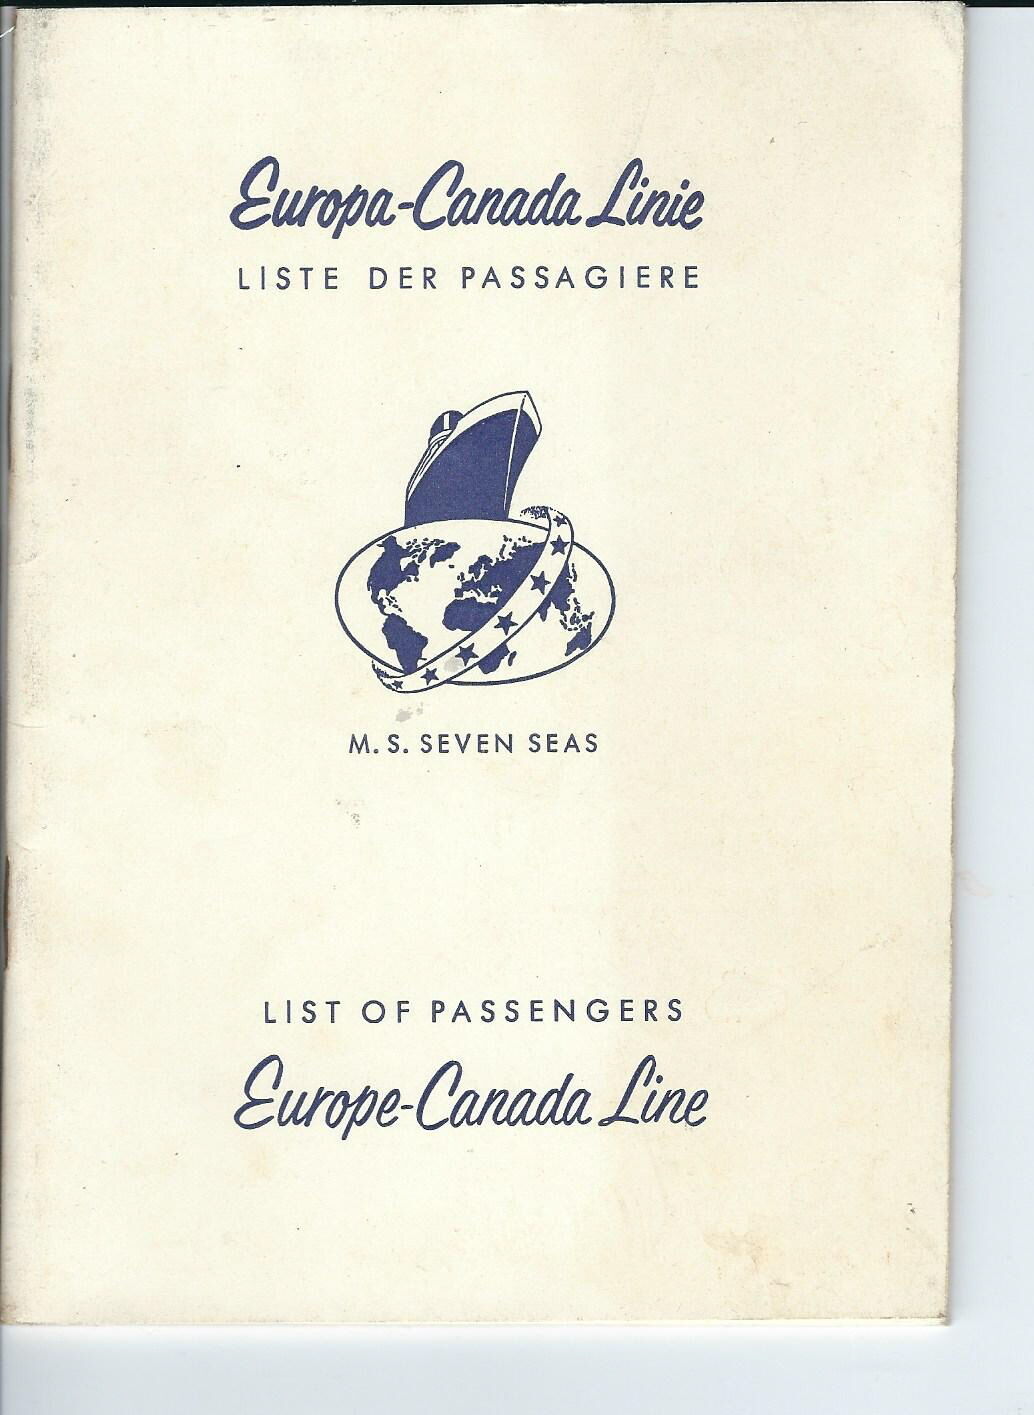 NE-046 - Europe Canada Line, M.S. Seven Seas, List of Passengers, August 1957